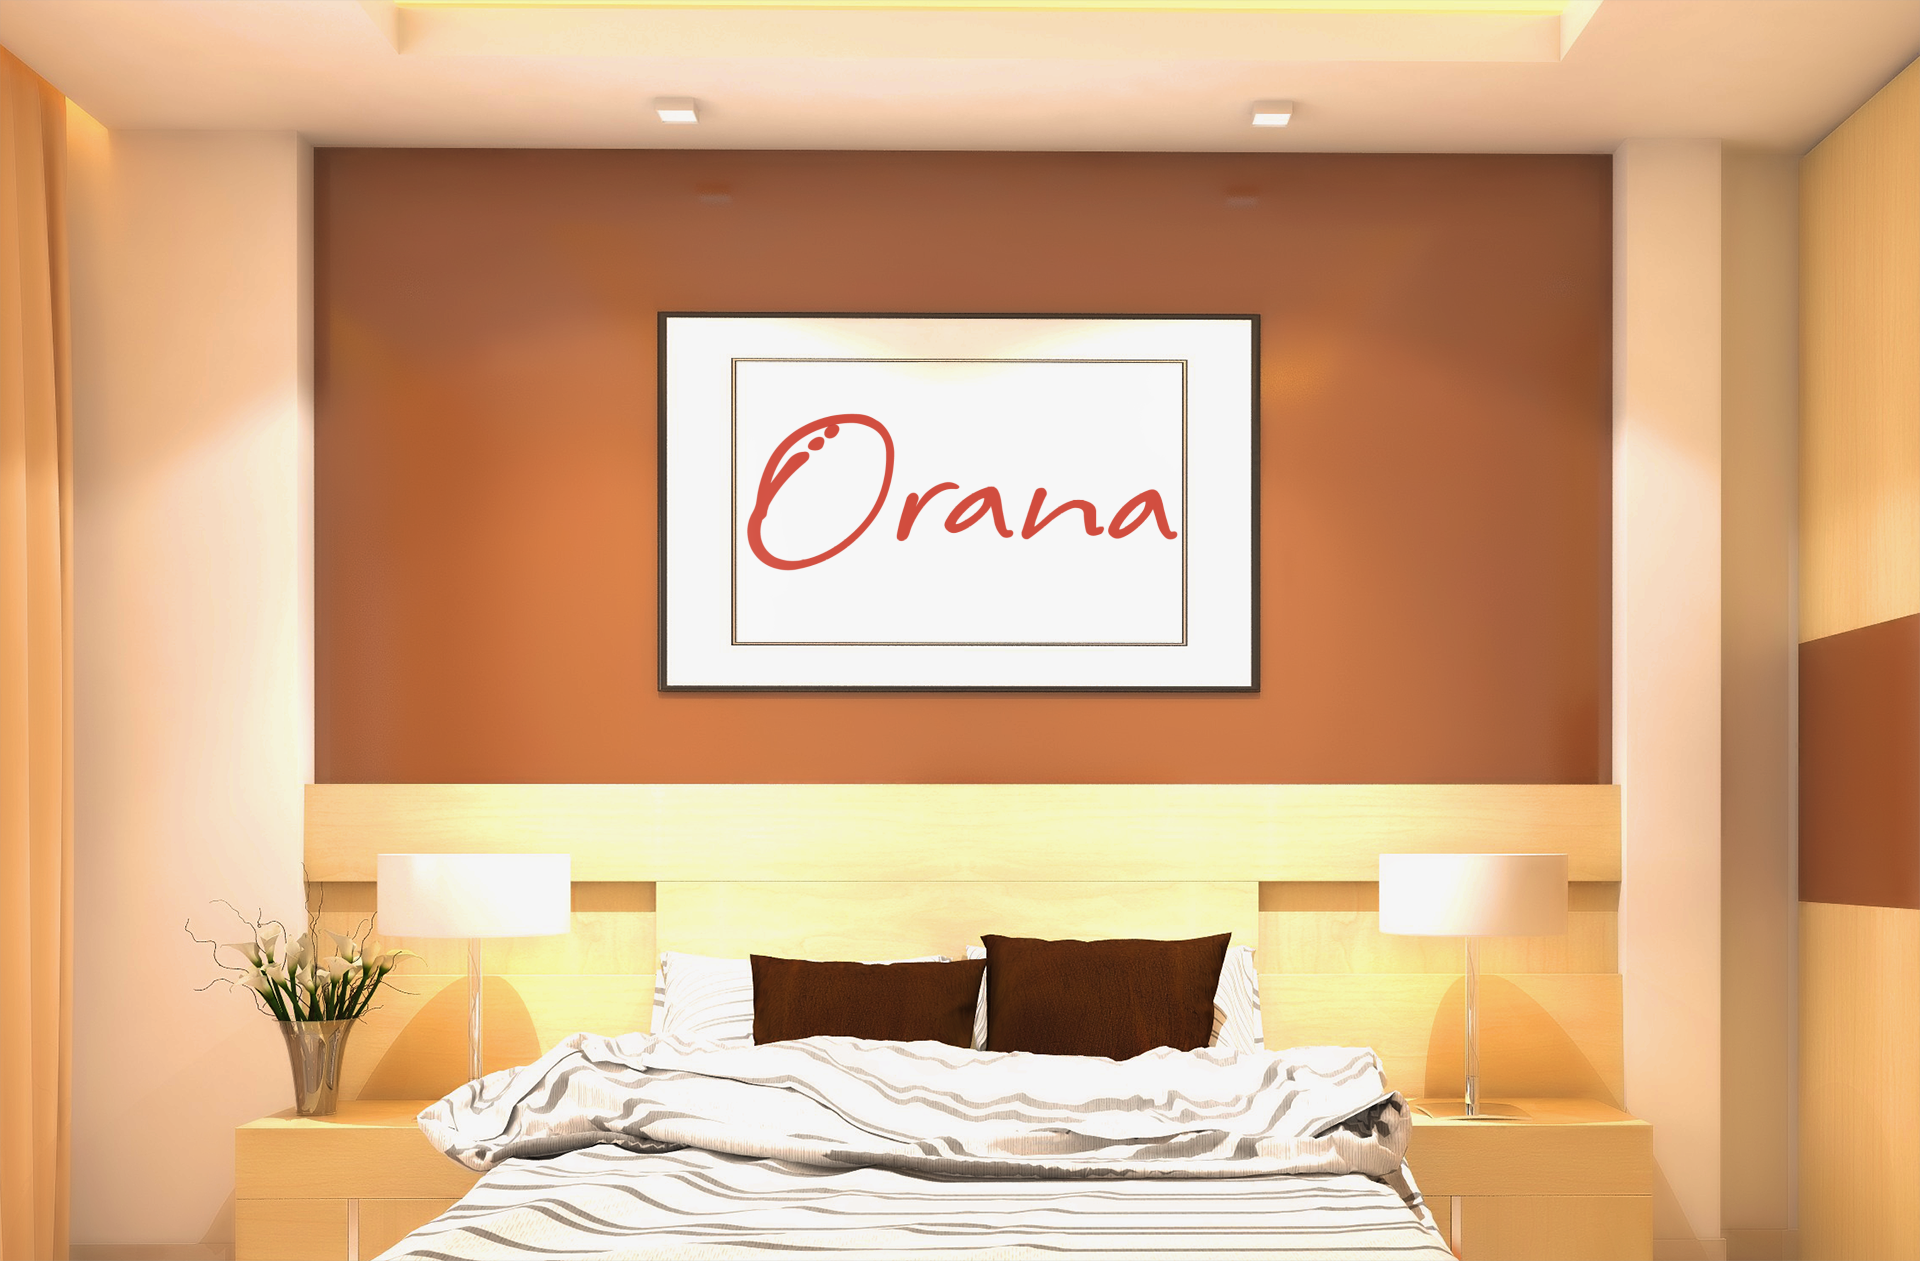 Orana software Cover Image